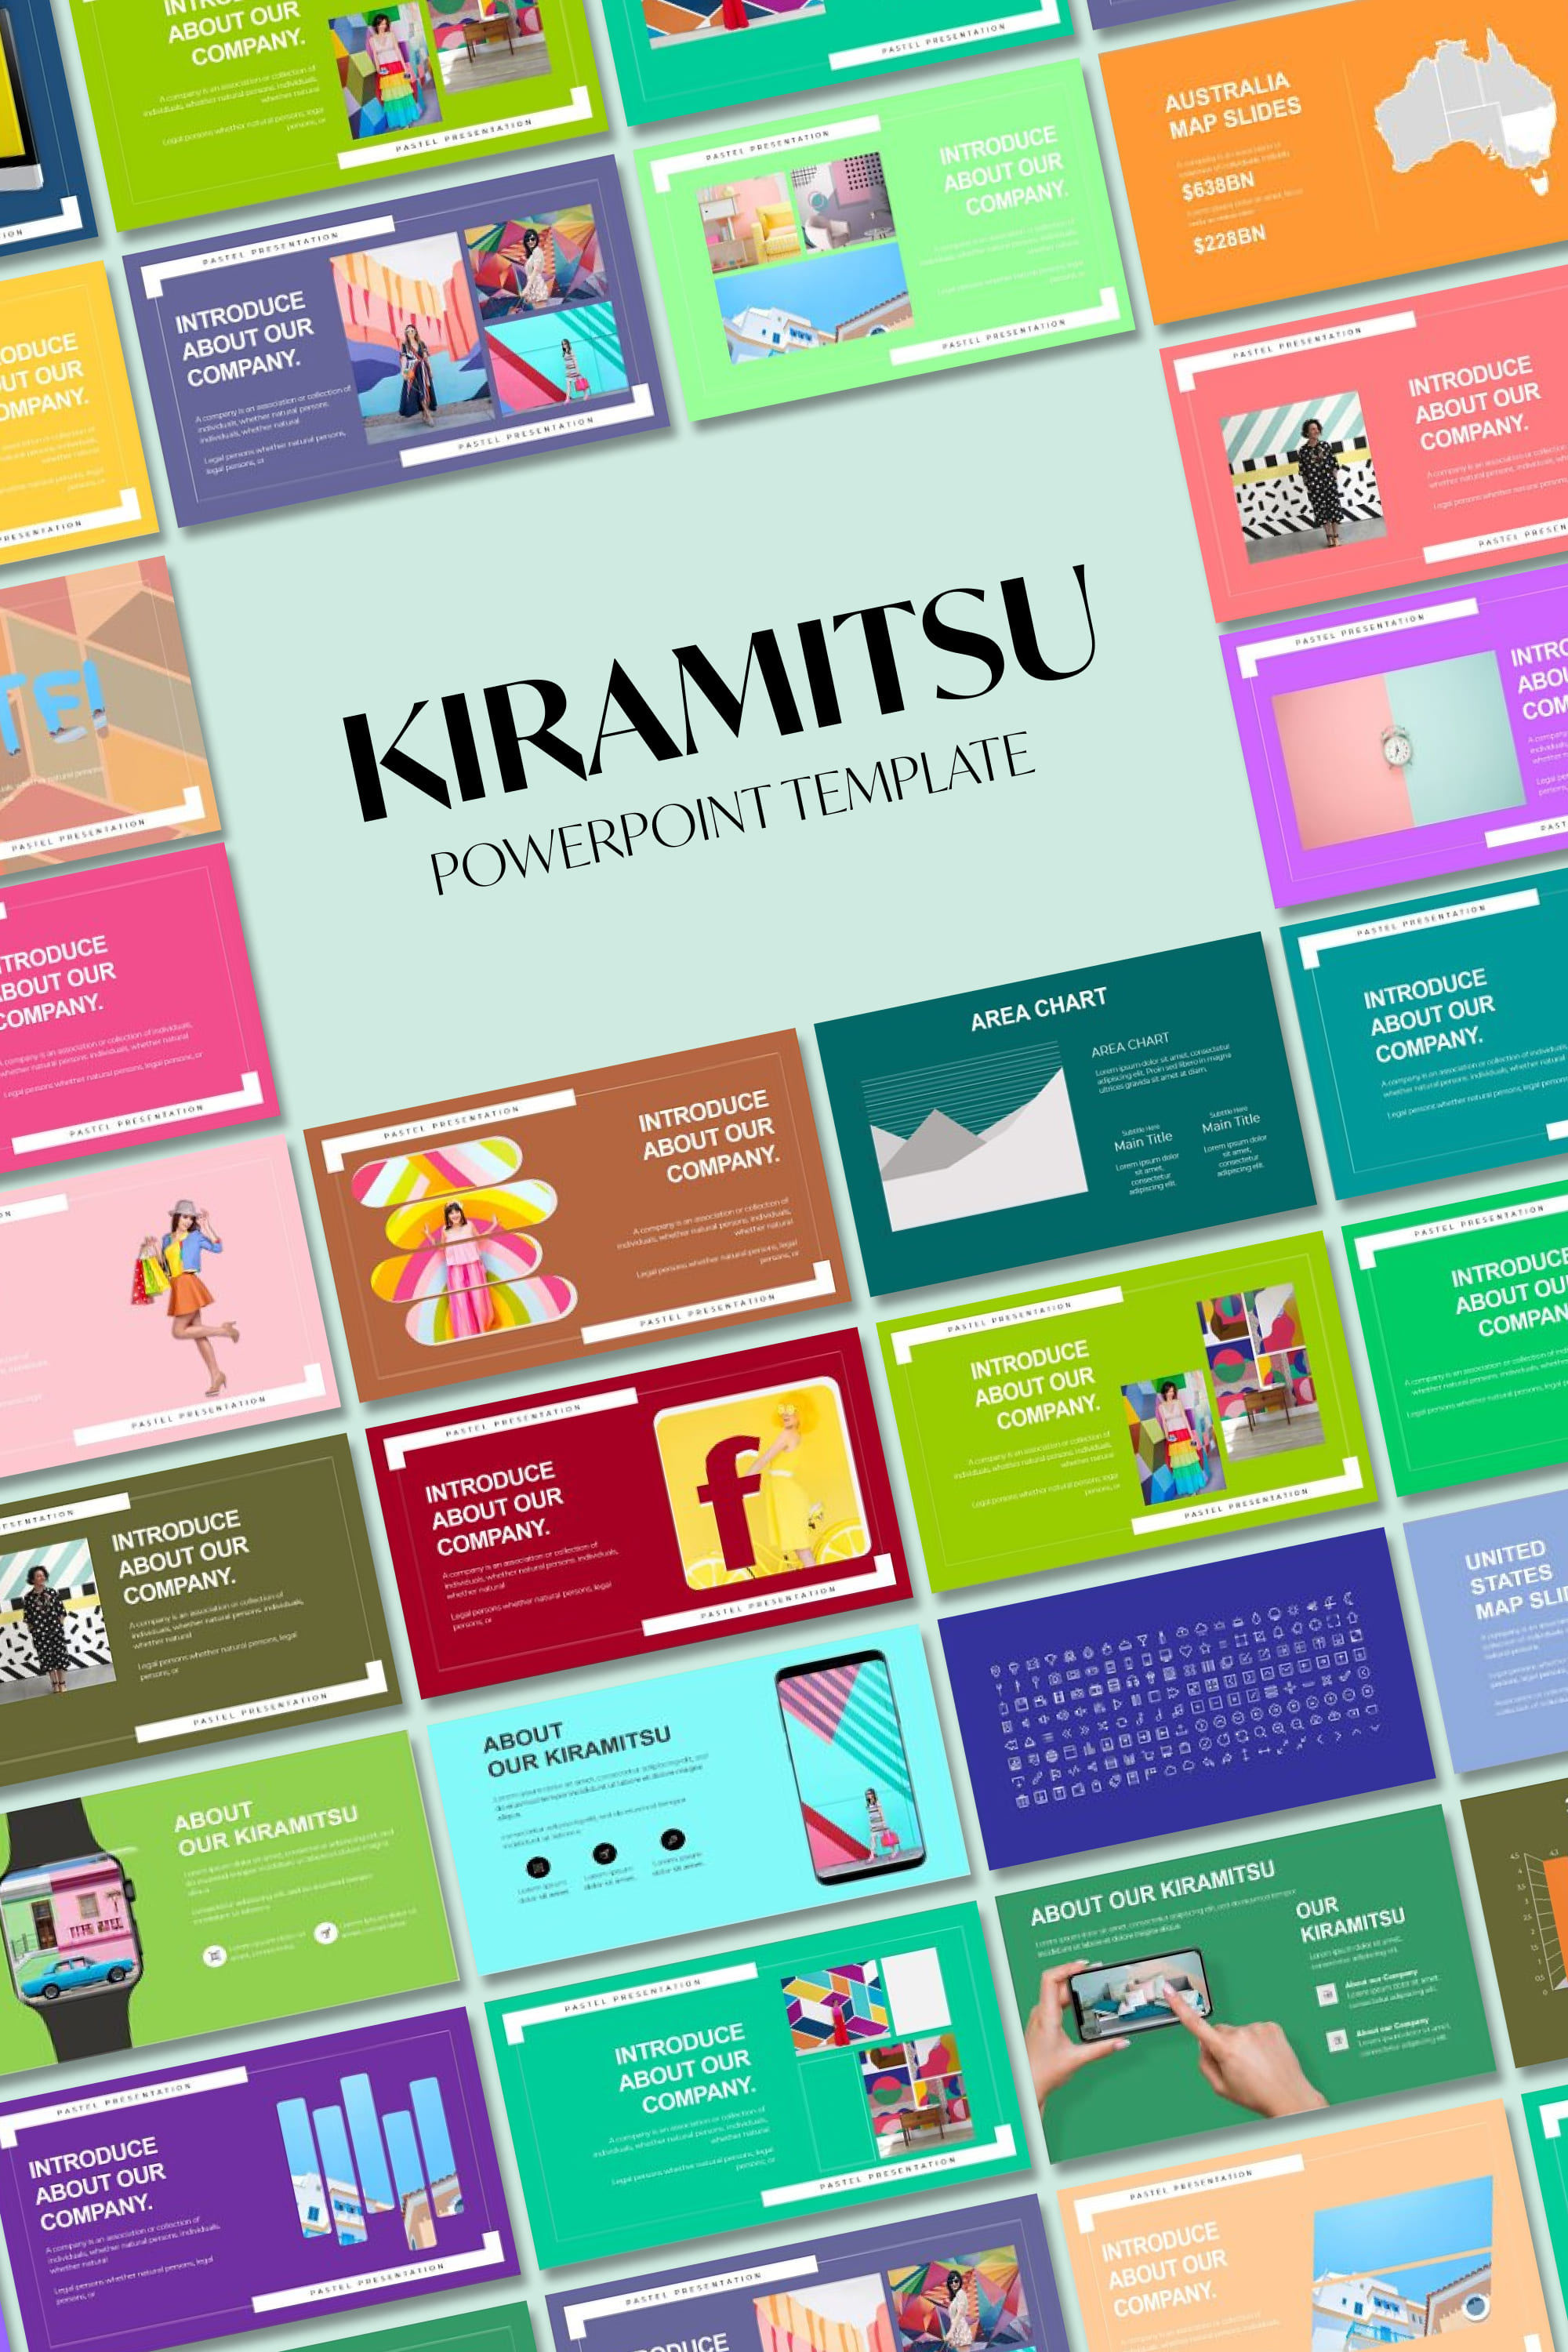 Kiramitsu powerpoint template - pinterest image preview.